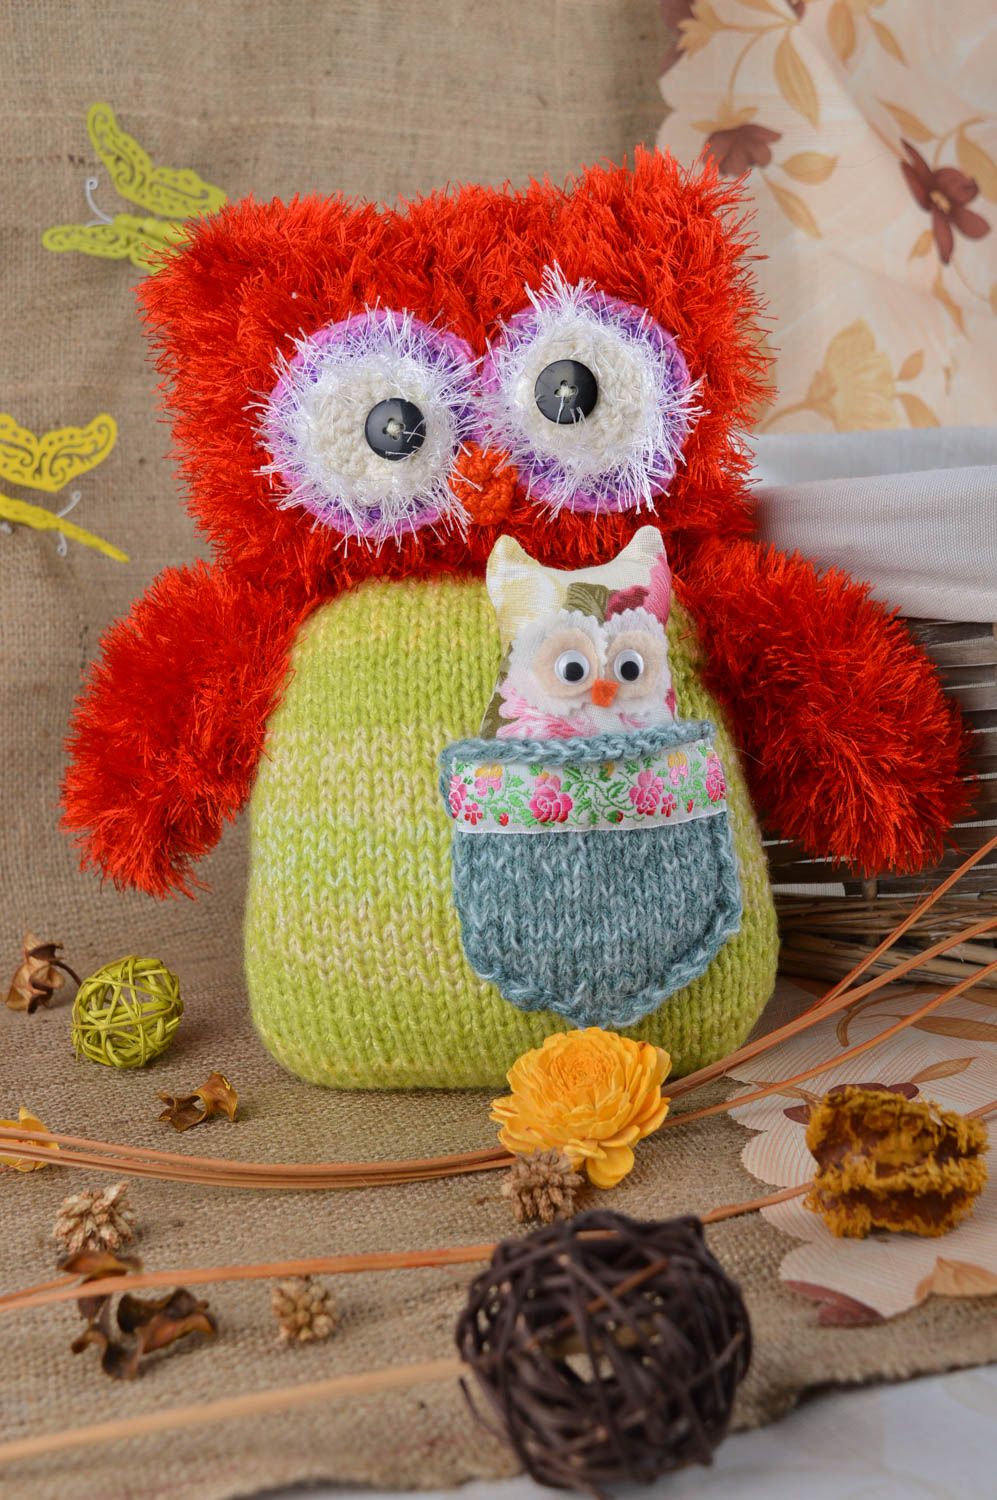 Handmade stuffed owl toy decorative soft toy gift for baby nursery decor ideas photo 1